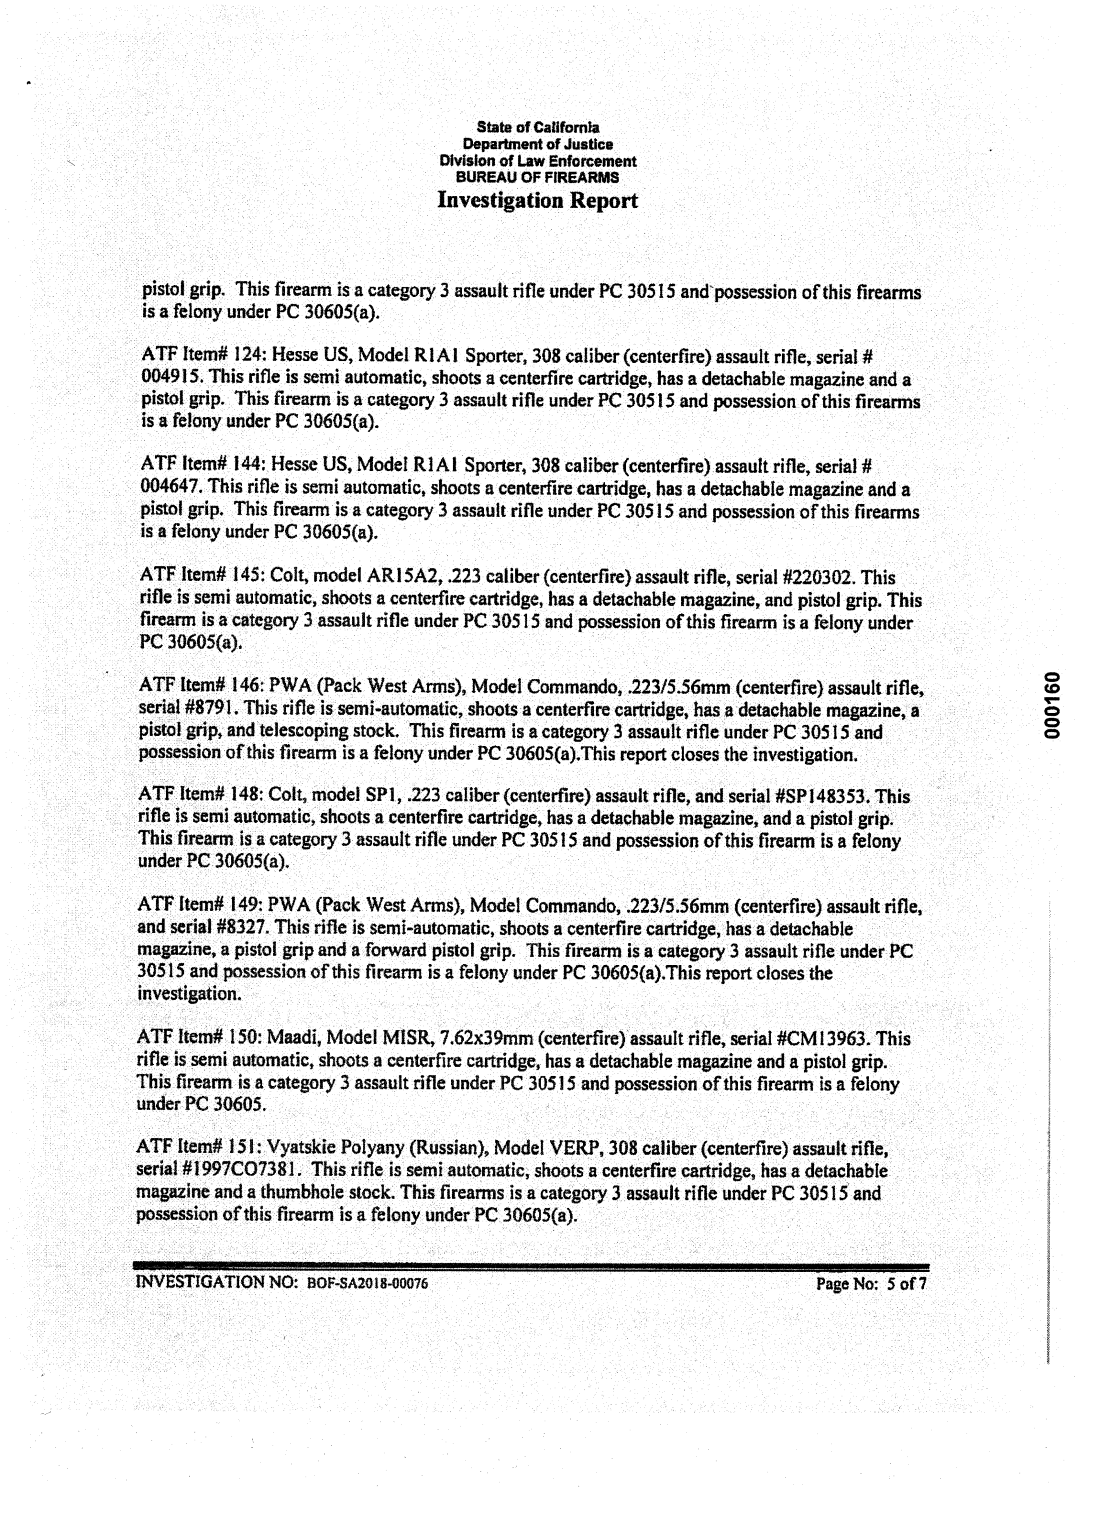 Ehrman report page 5